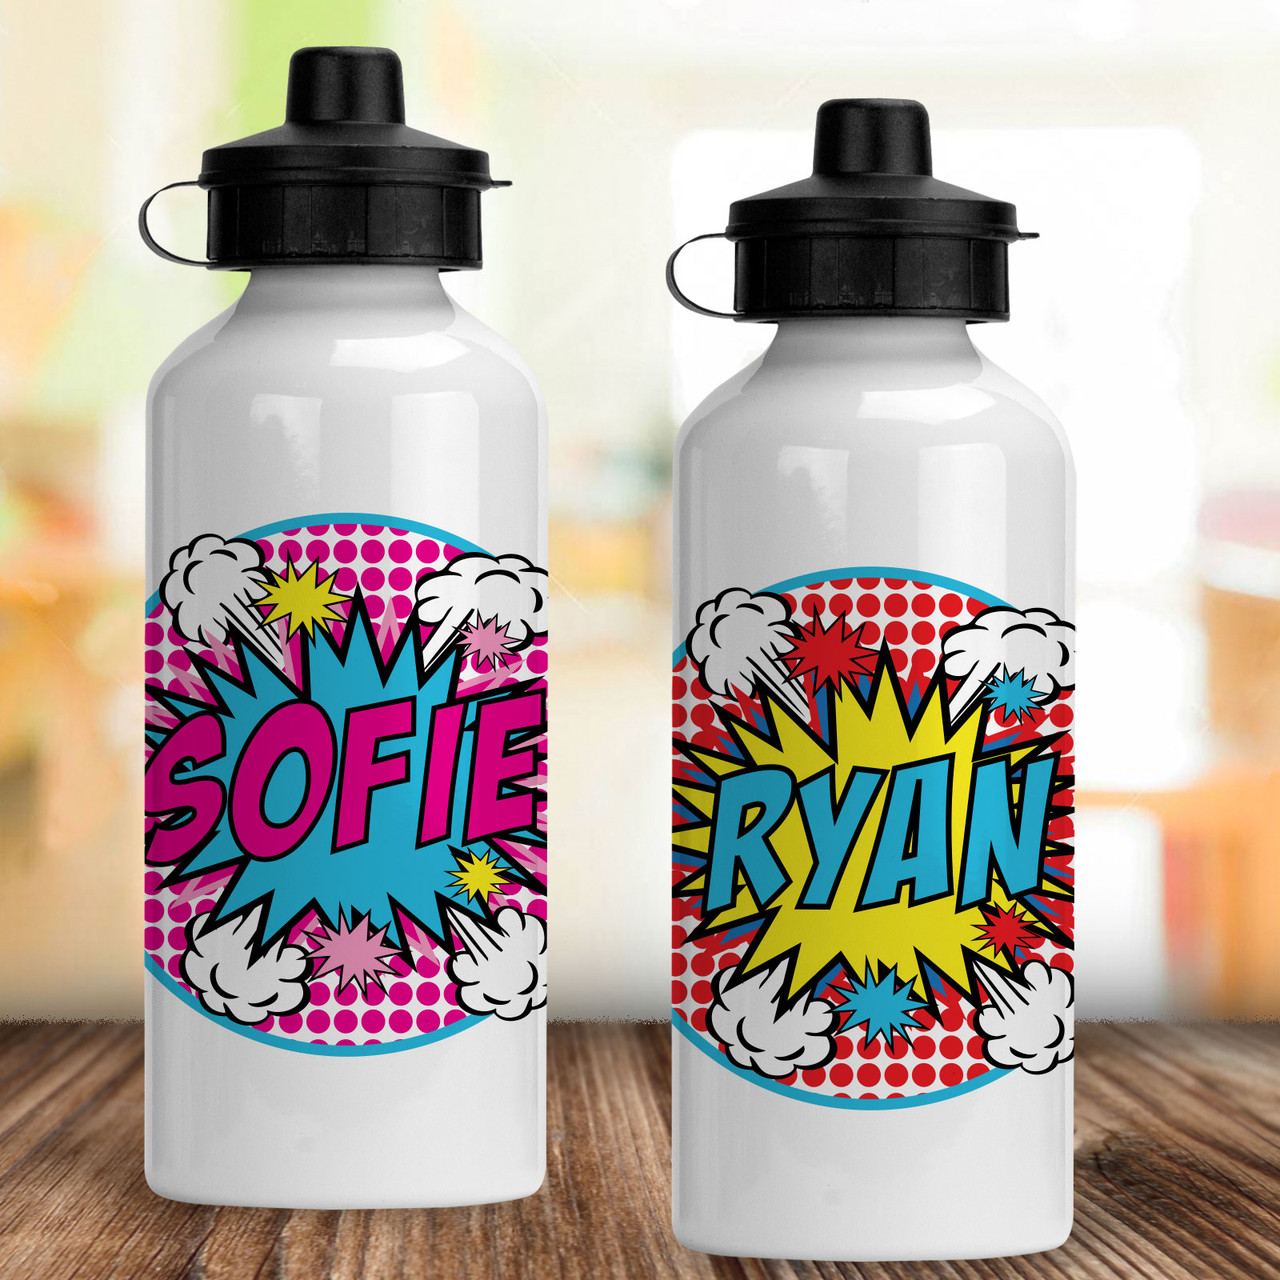 https://cdn11.bigcommerce.com/s-5grzuu6/images/stencil/1280x1280/products/299/30191/Pop-Art-Water-Bottle-Duo__73021.1565365215.jpg?c=2